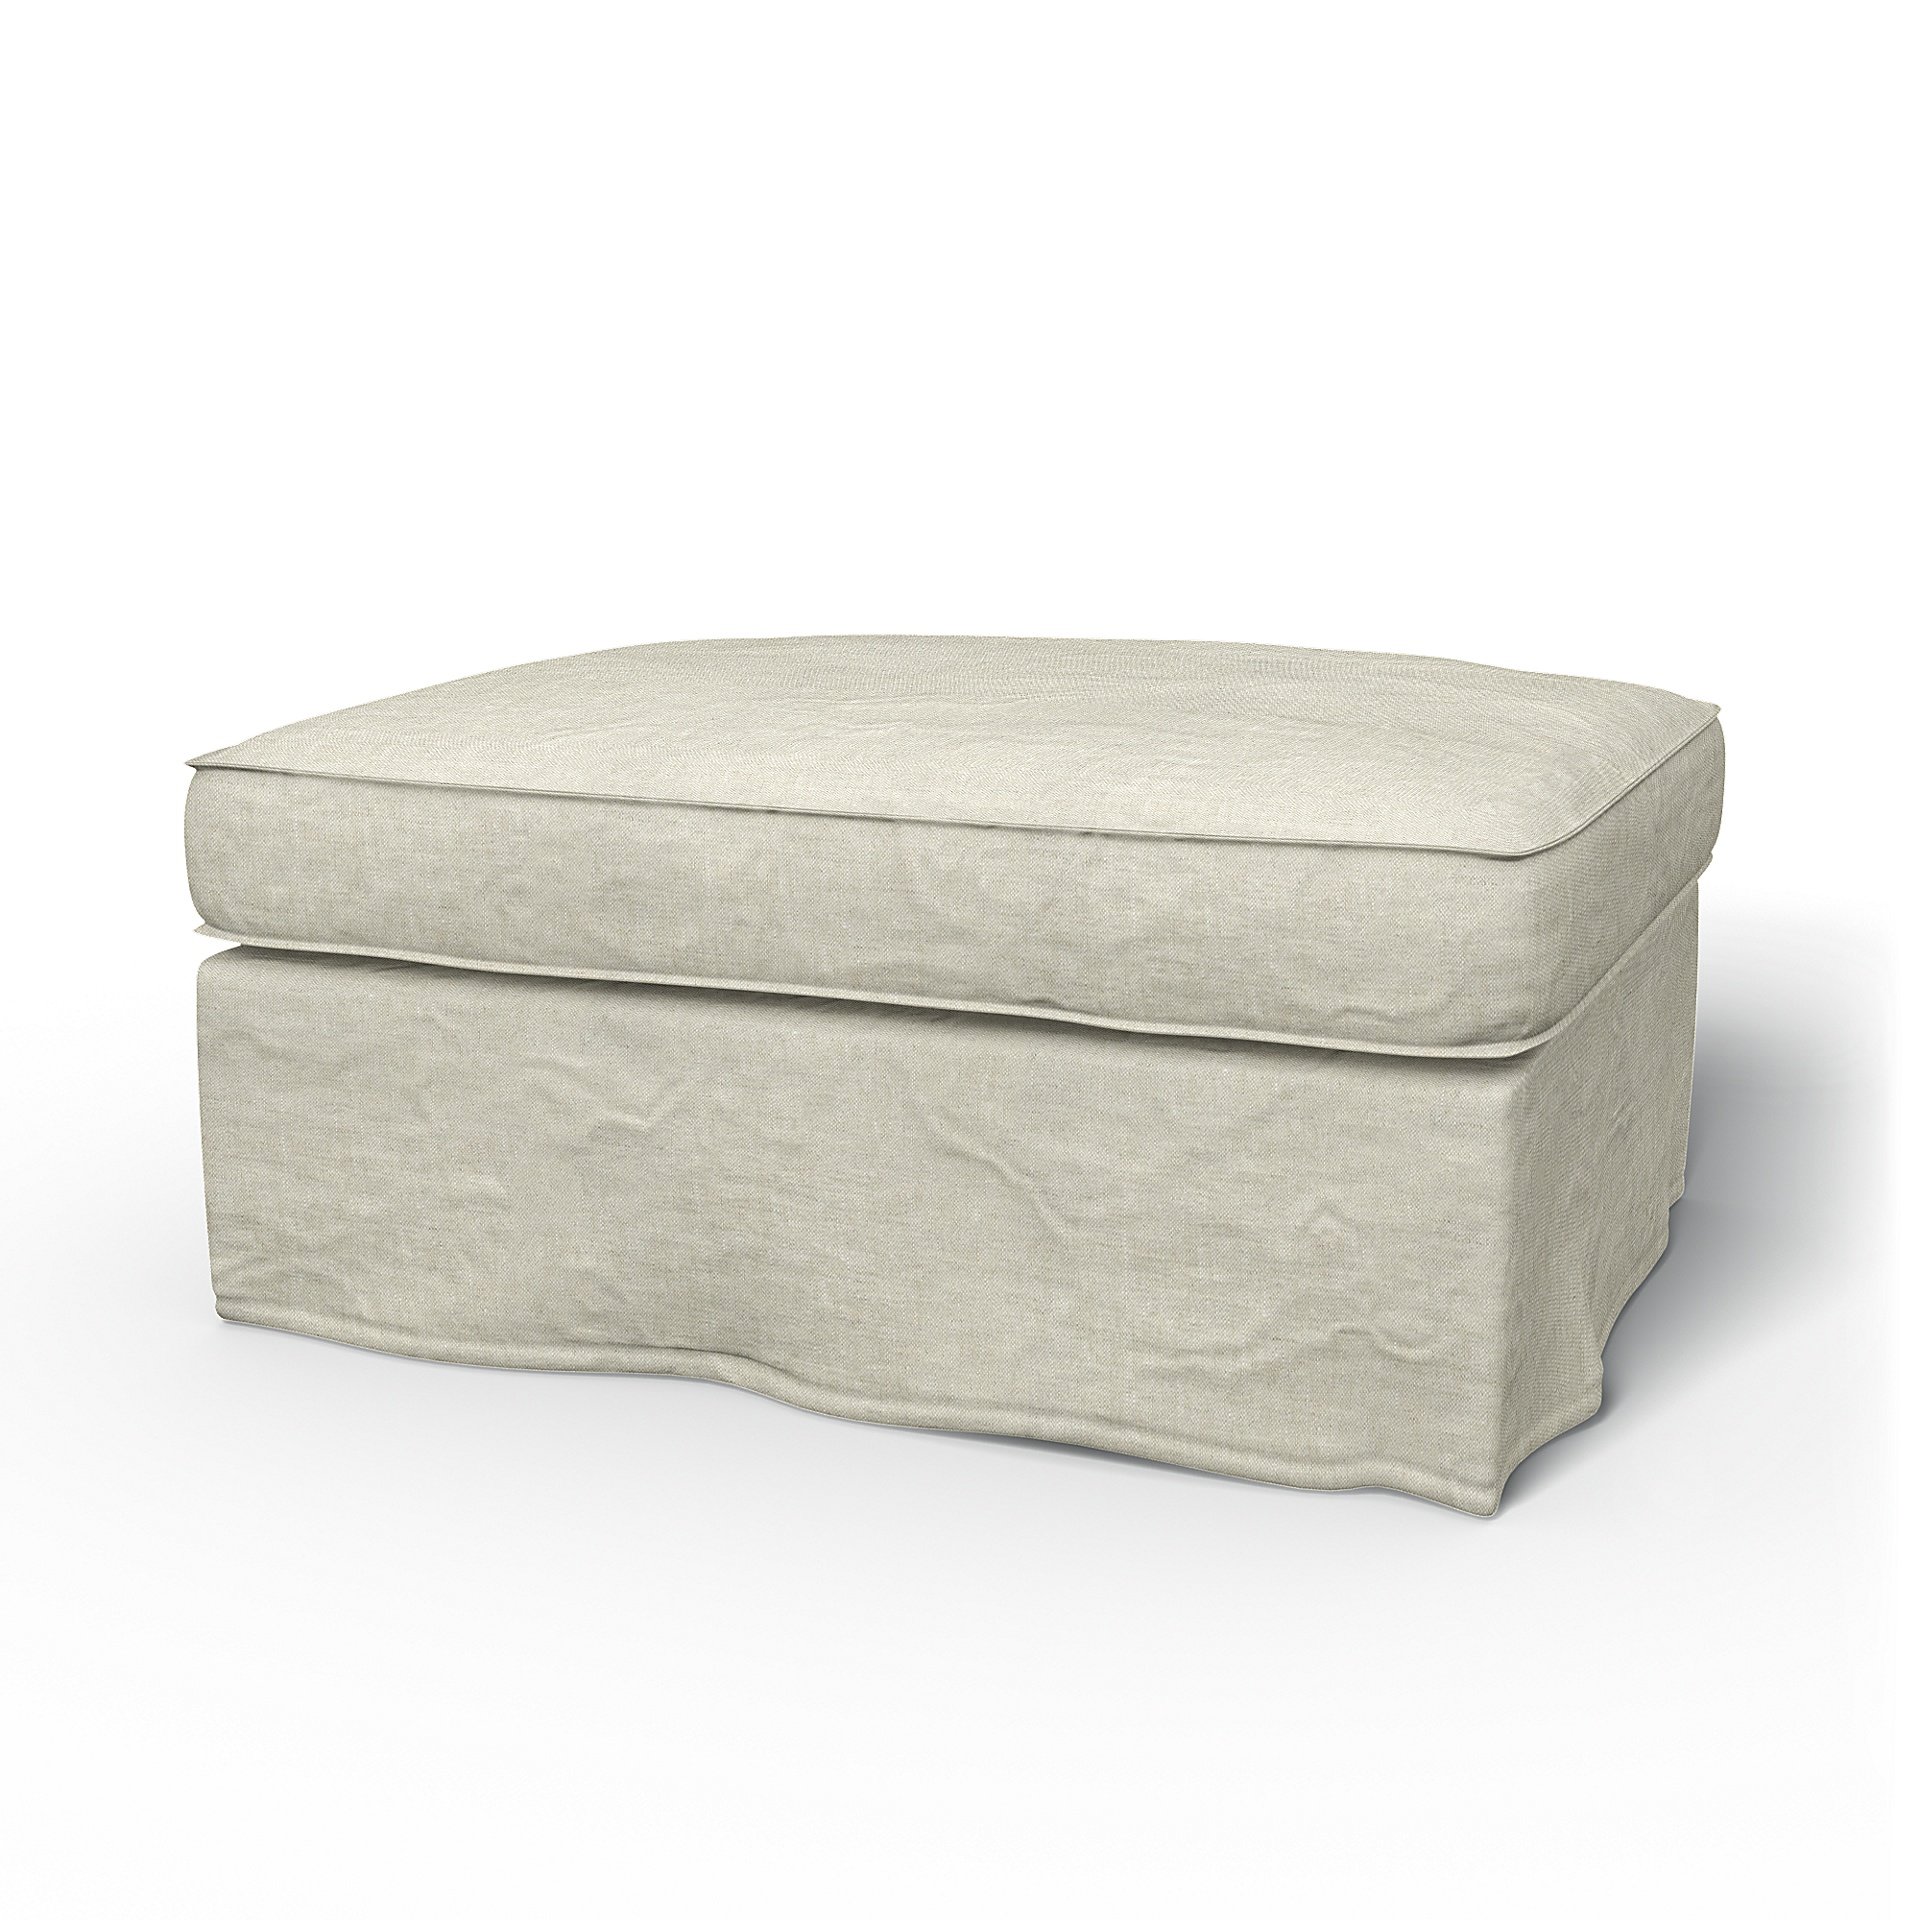 IKEA - Kivik Footstool Cover, Natural, Linen - Bemz